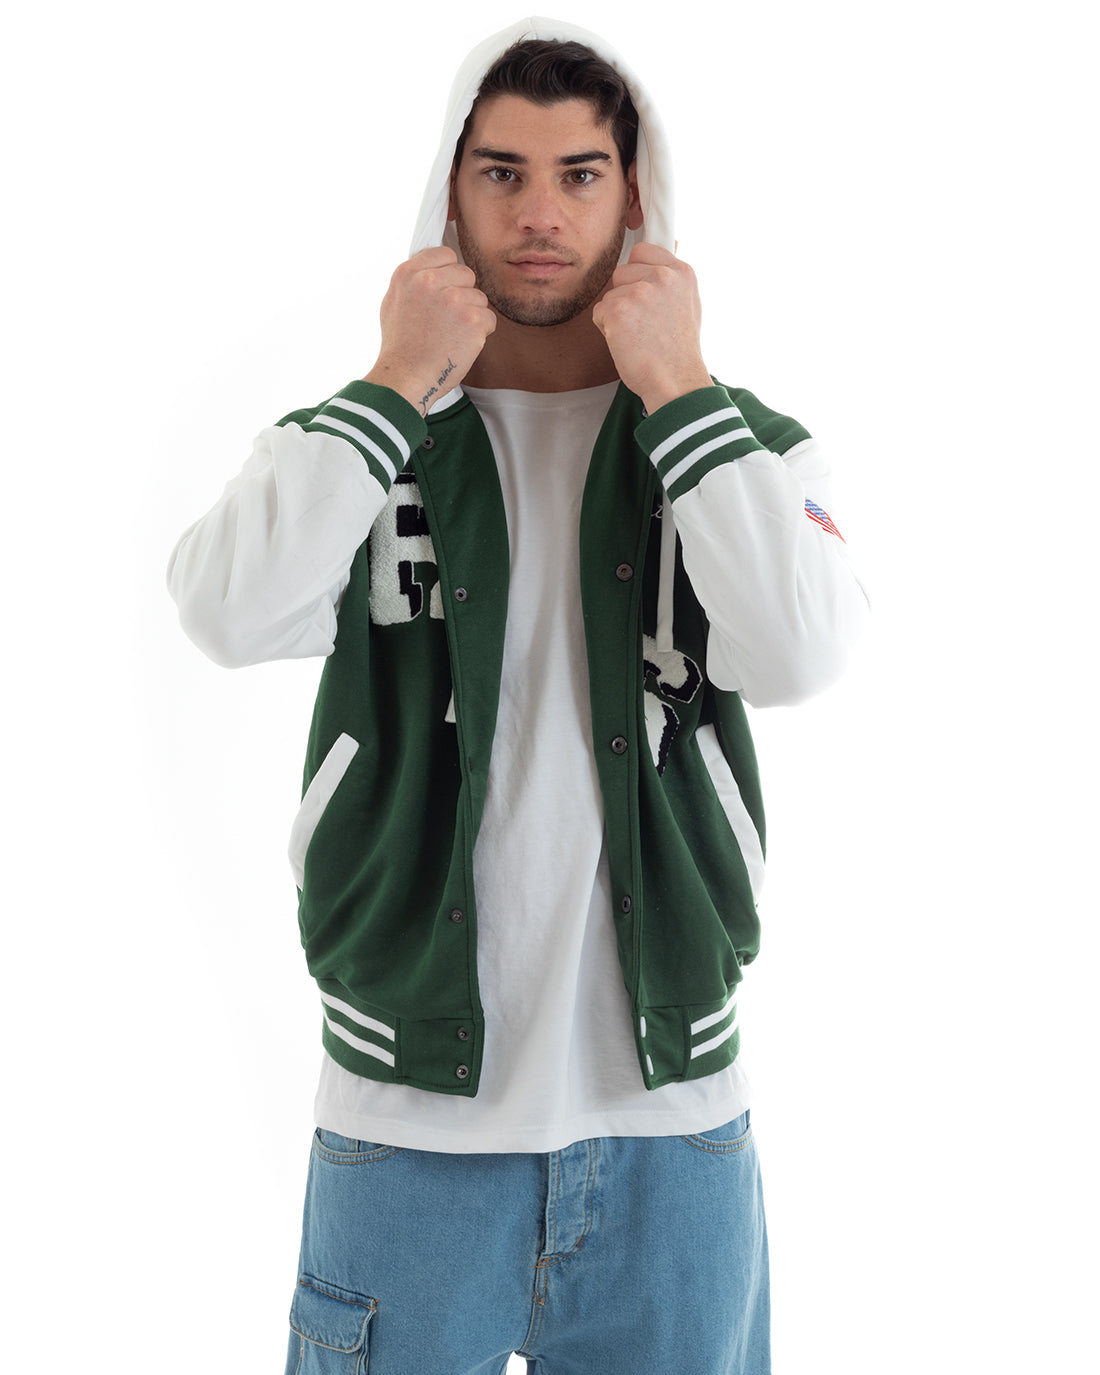 Men's Sweatshirt Varsity College Jacket Two-Tone Print Hooded Green White GIOSAL-F2969A